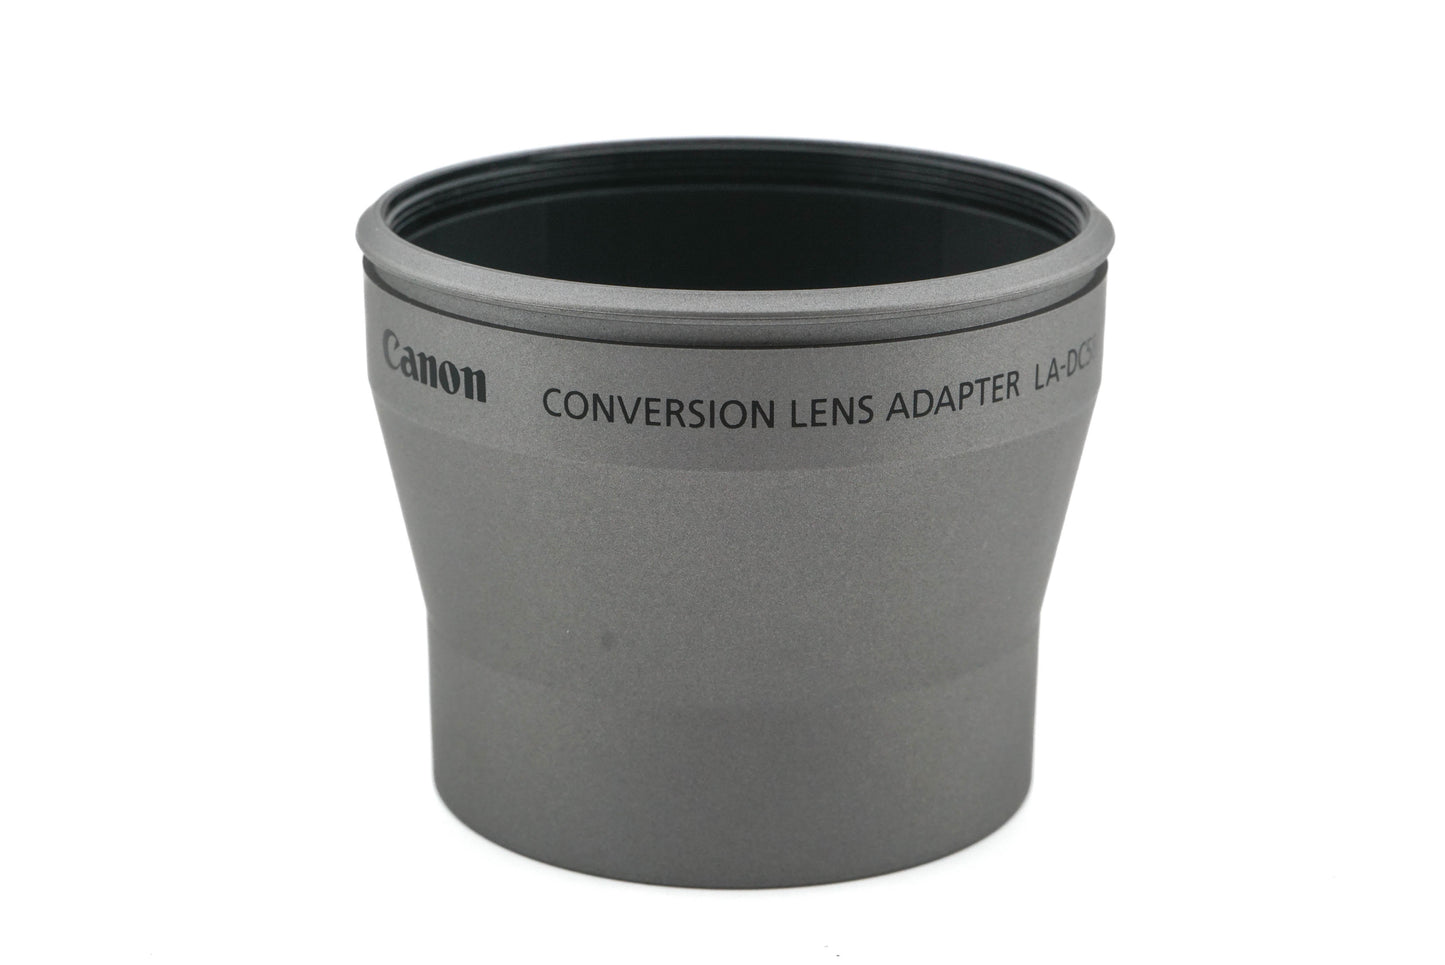 Canon LA-DC58B Conversion Lens Adapter